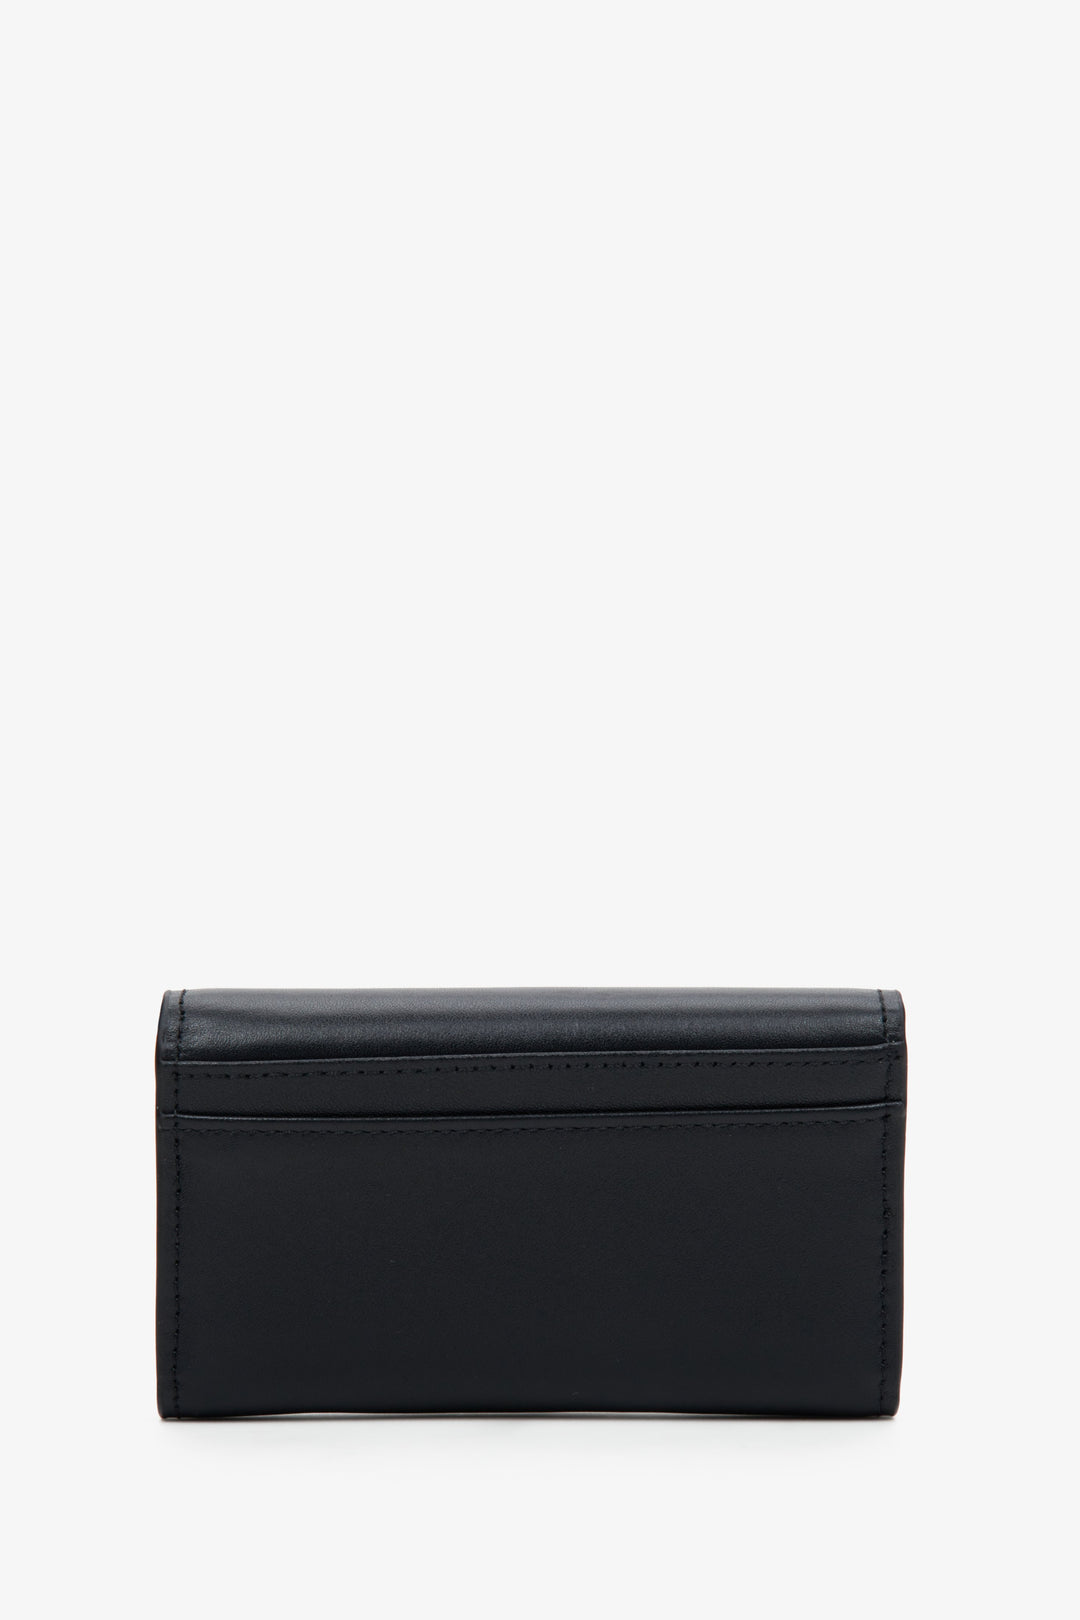 Women's black key case made of genuine leather by Estro - reverse side.